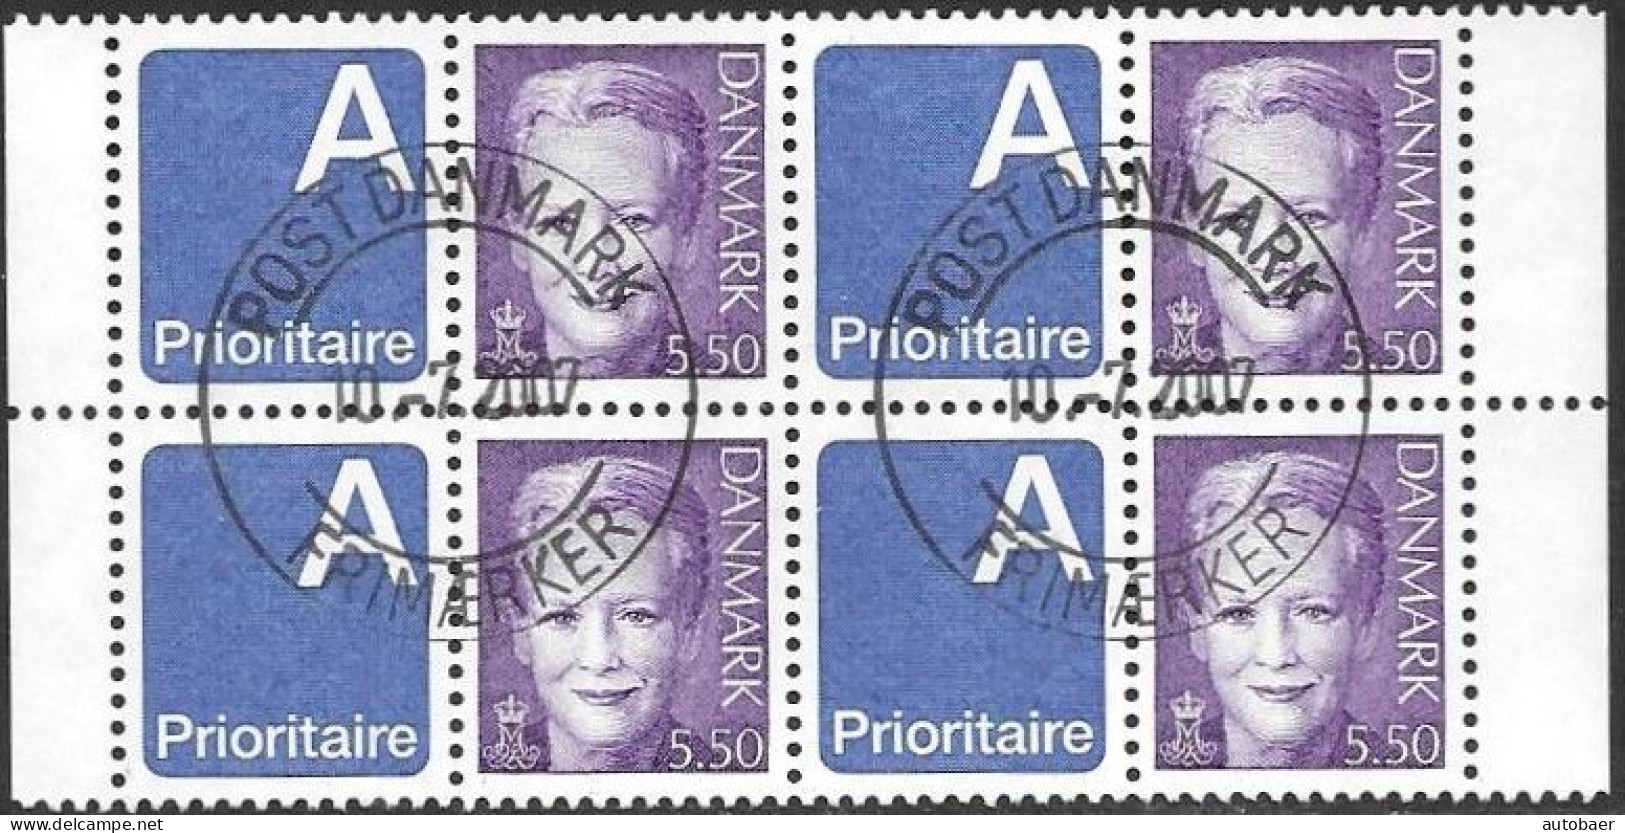 Denmark Danmark Dänemark 2003 Margrethe Prioritaire Michel Nr. 1245 Zf Bloc Of 4 Cancelled Oblitere Gestempelt Used Oo - Used Stamps